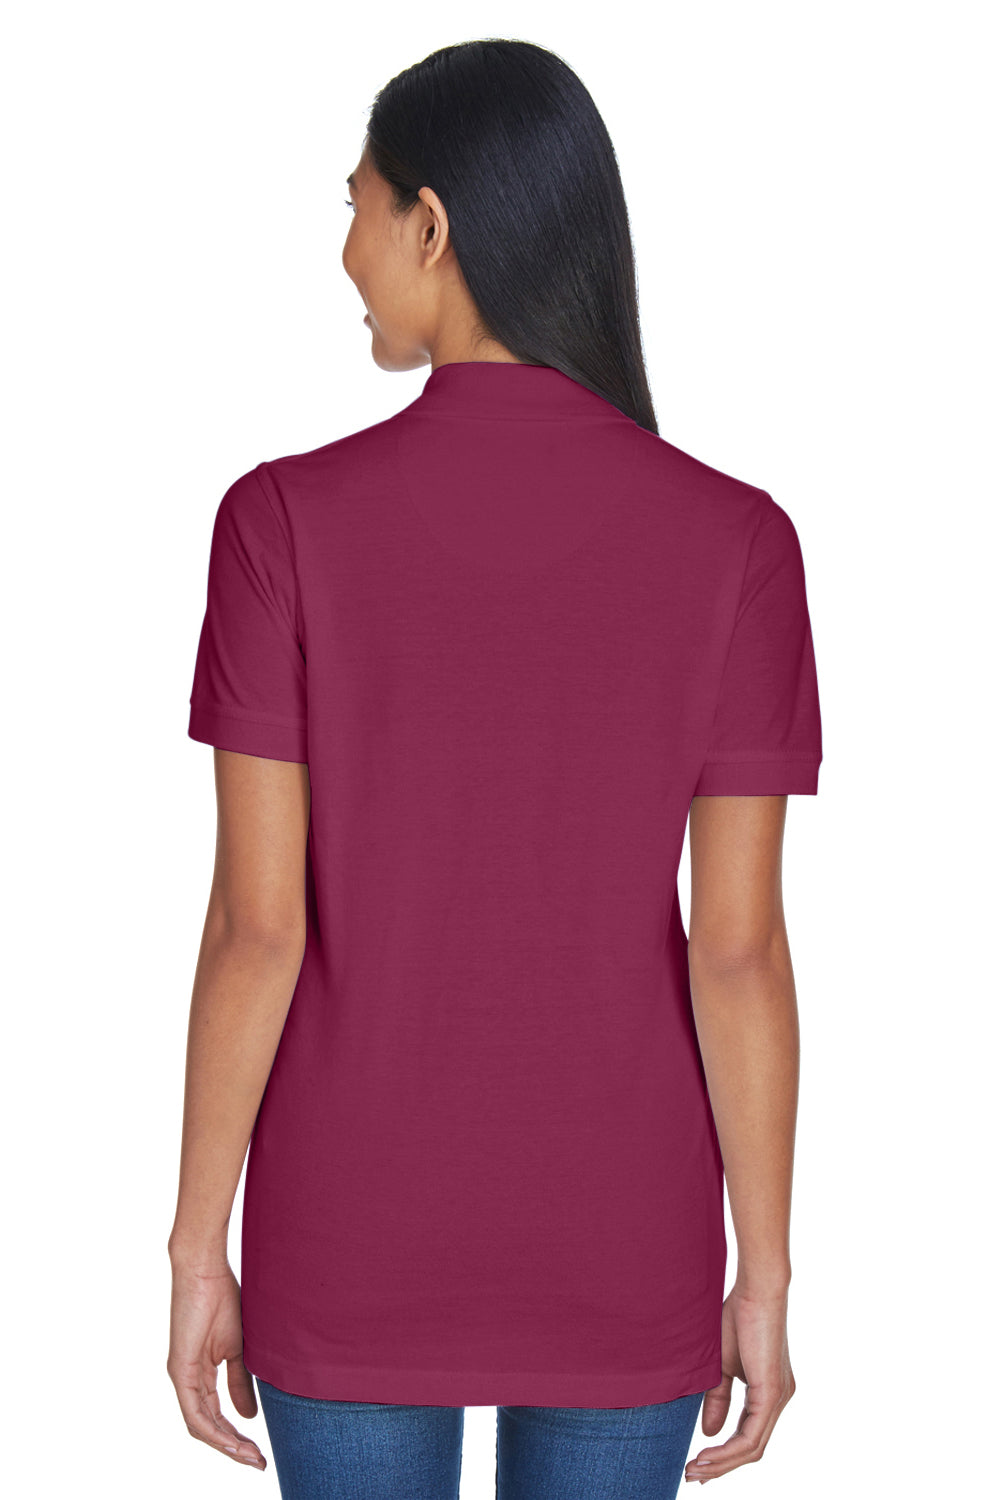 UltraClub 8530 Womens Classic Short Sleeve Polo Shirt Burgundy Back